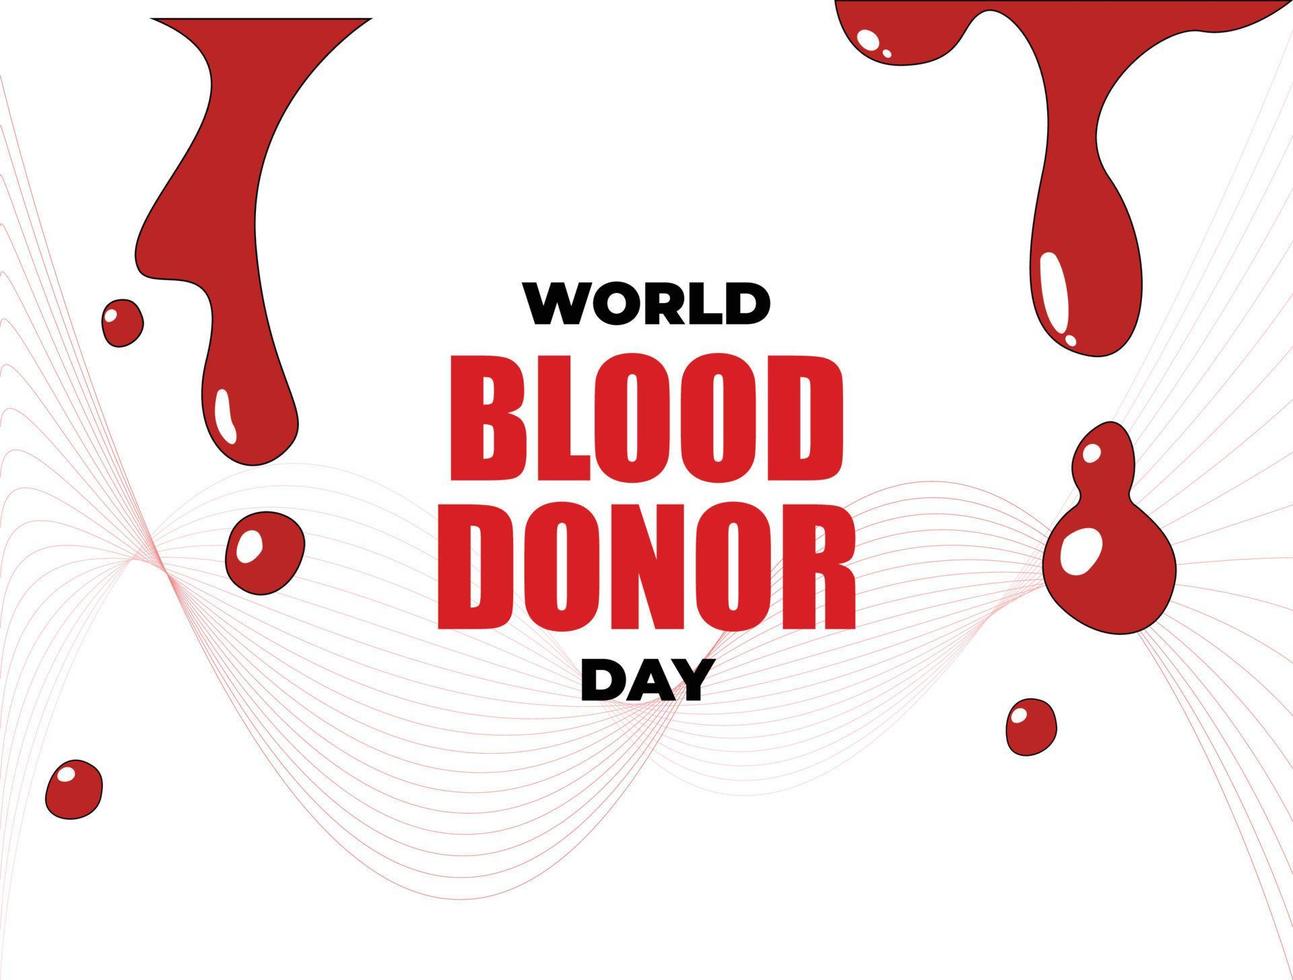 donación internacional de sangre, diseño para la celebración del día internacional del donante de sangre vector